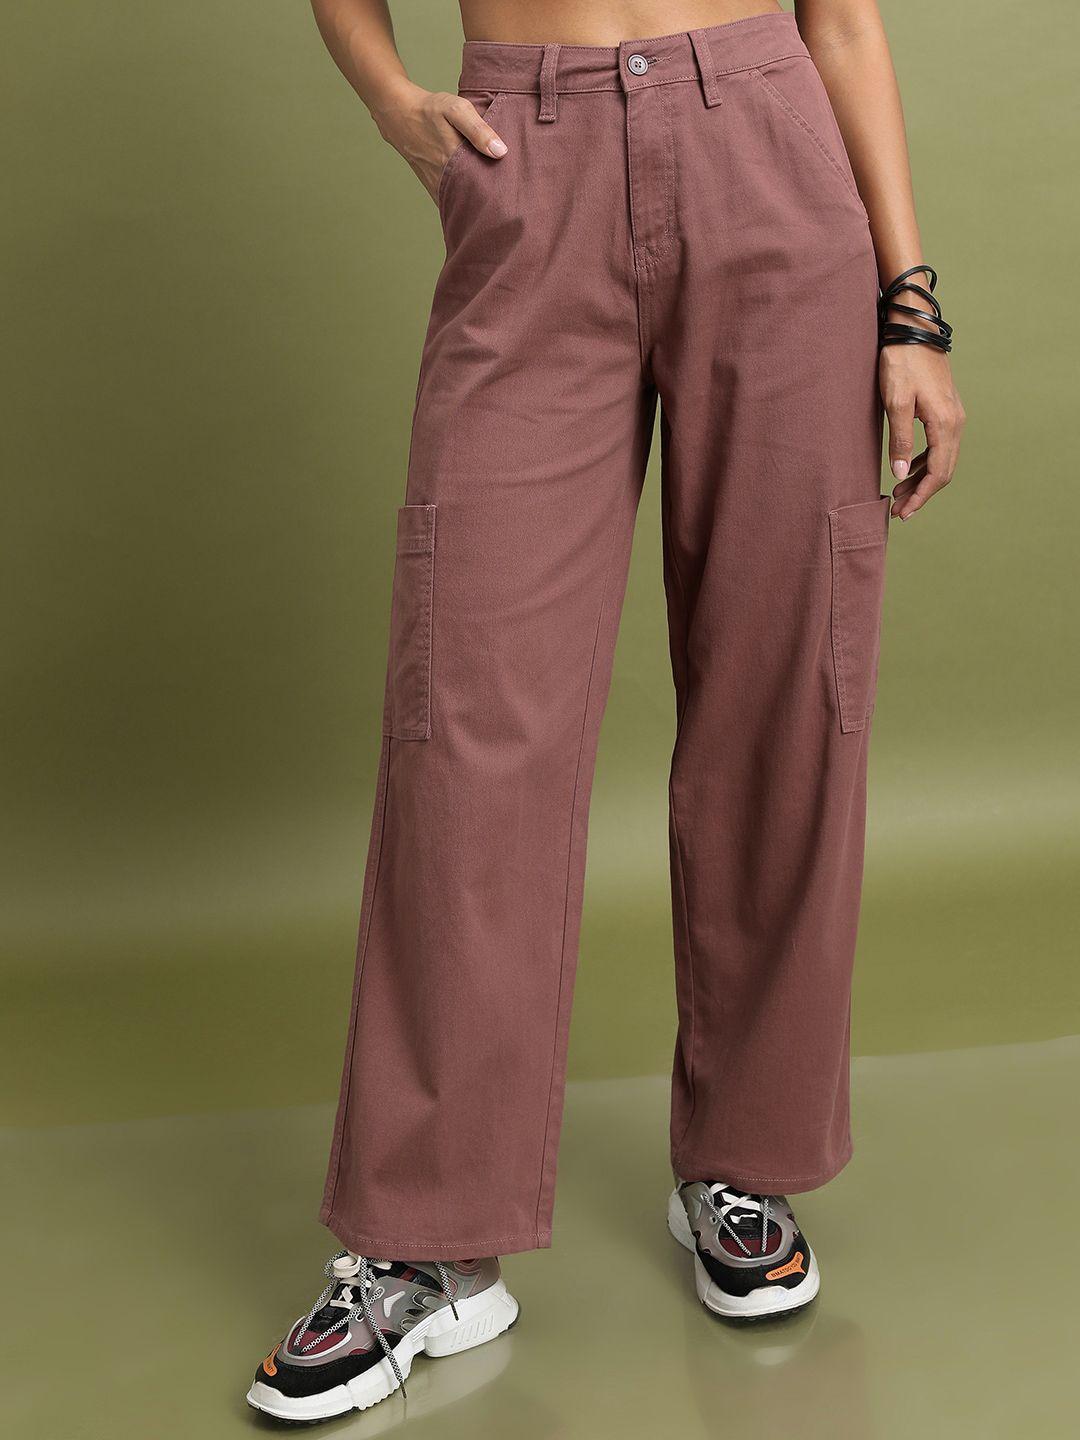 tokyo-talkies-women-high-rise-flared-plain-cotton-cargos-trousers